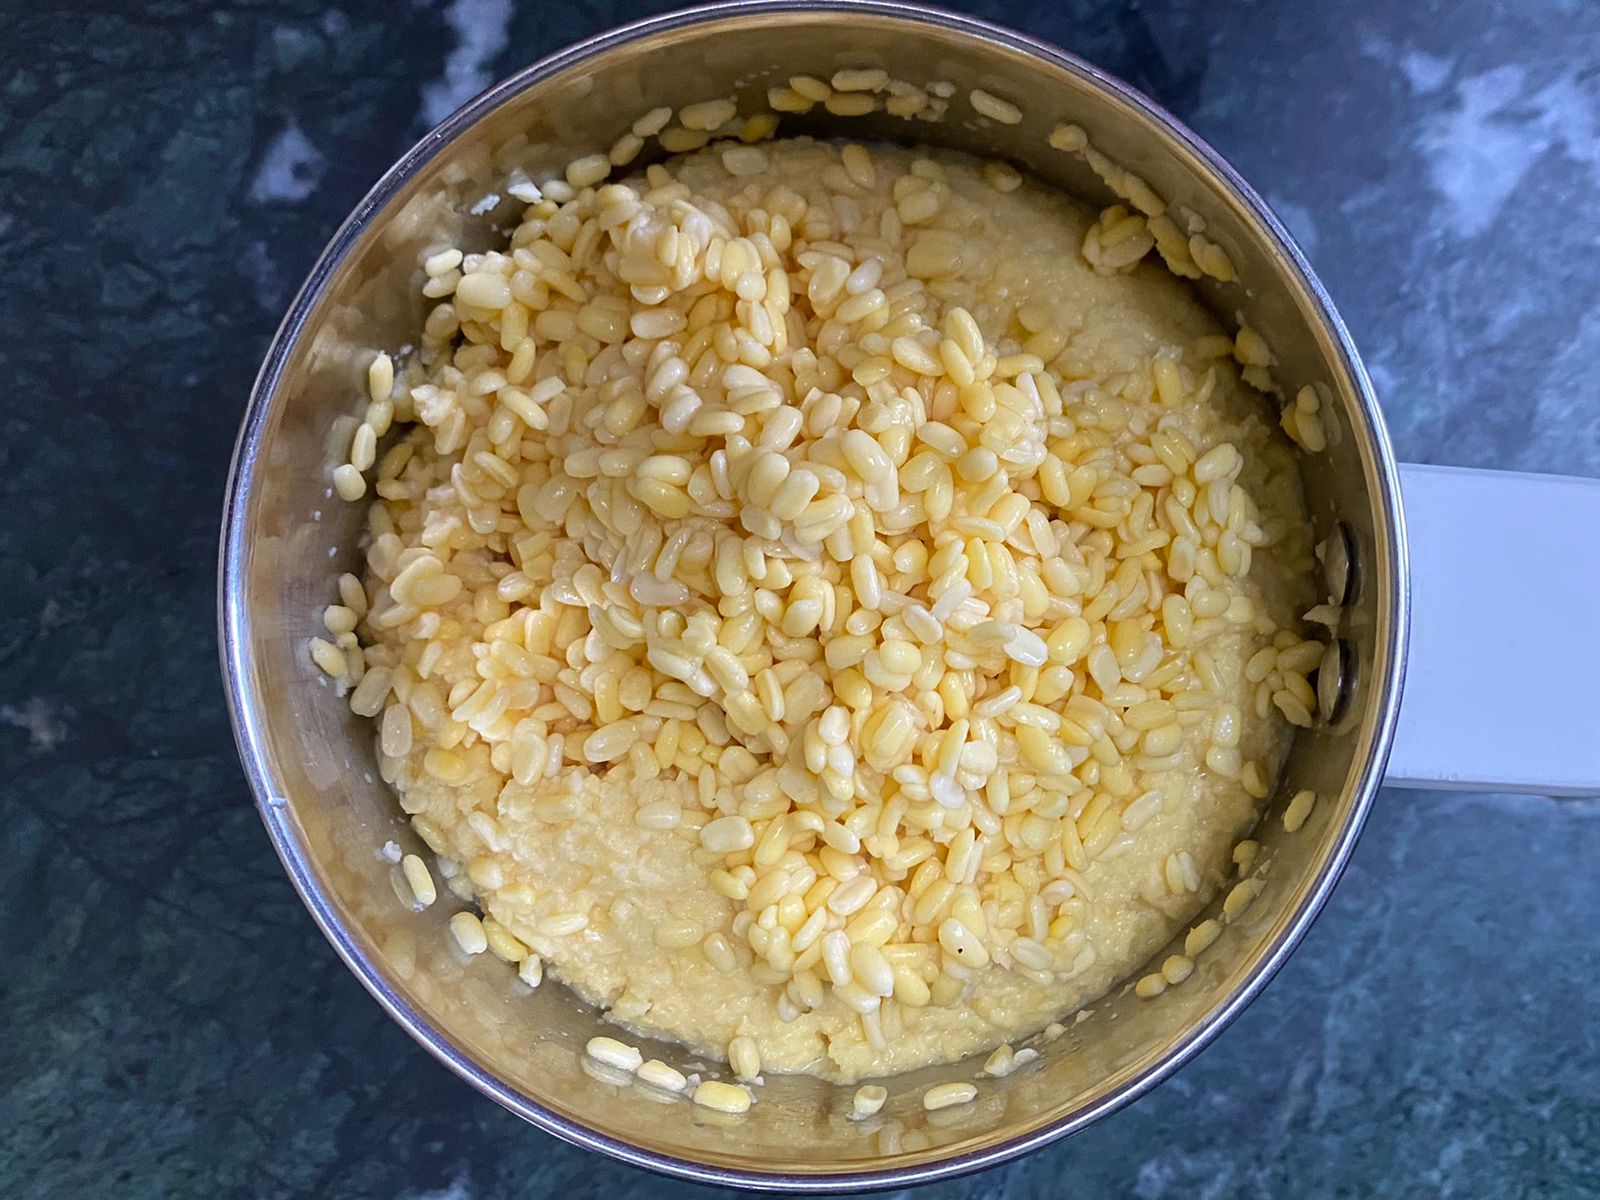 Moong Dal Halwa Recipe